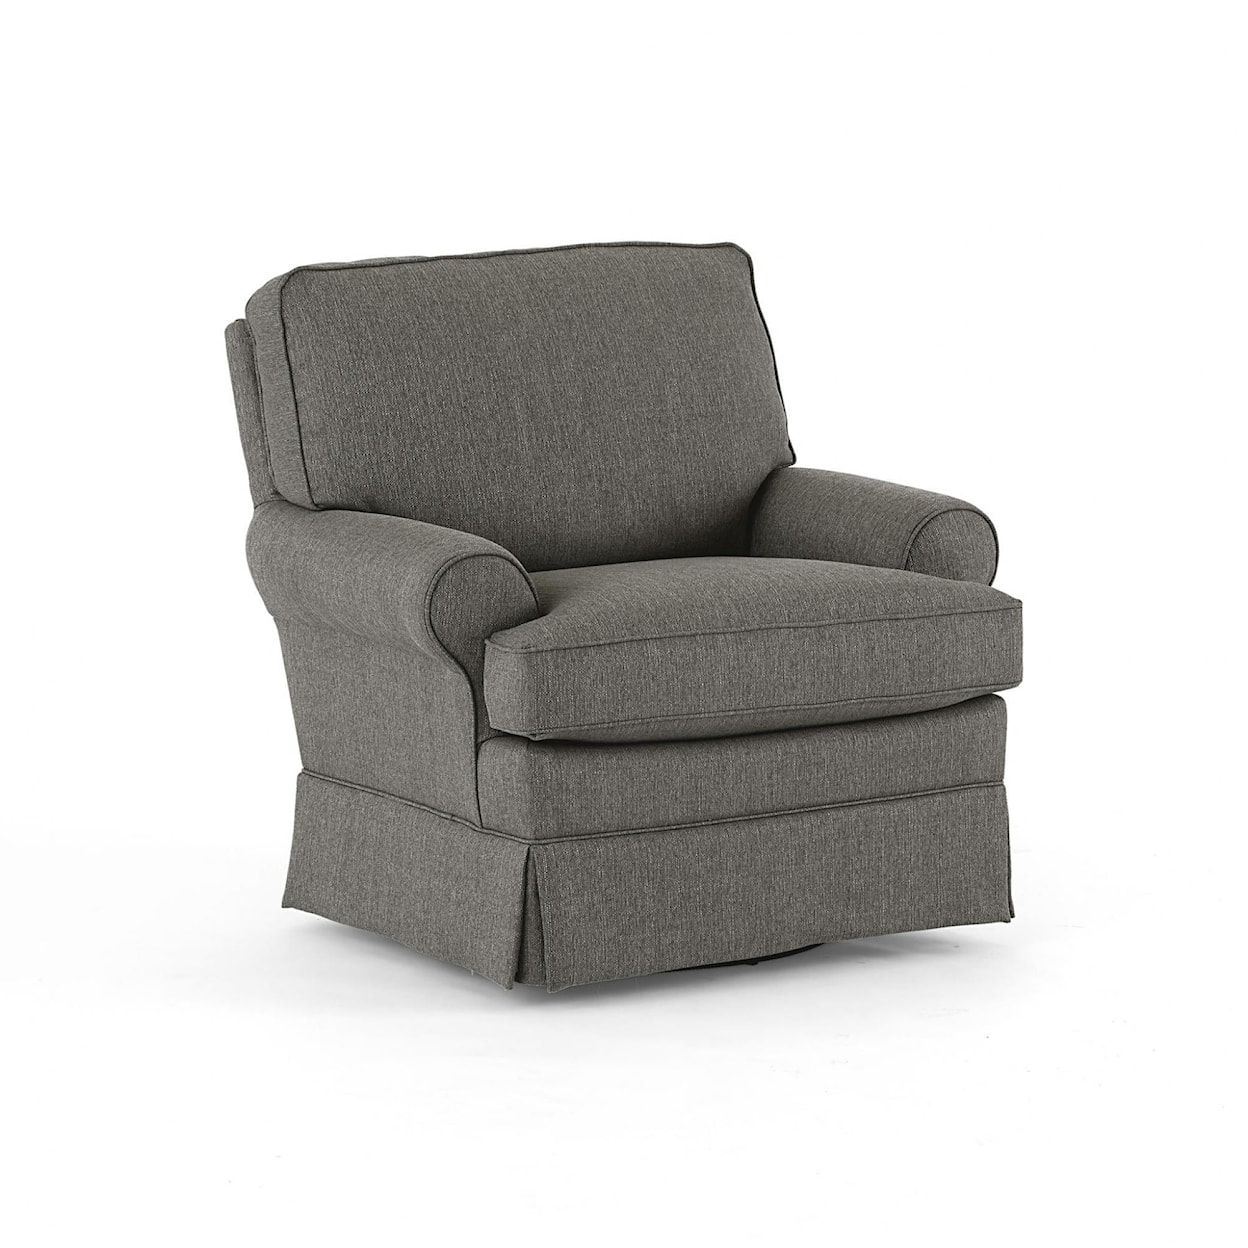 Bravo Furniture Quinn Swivel Glider Chair with Welt Cord Trim